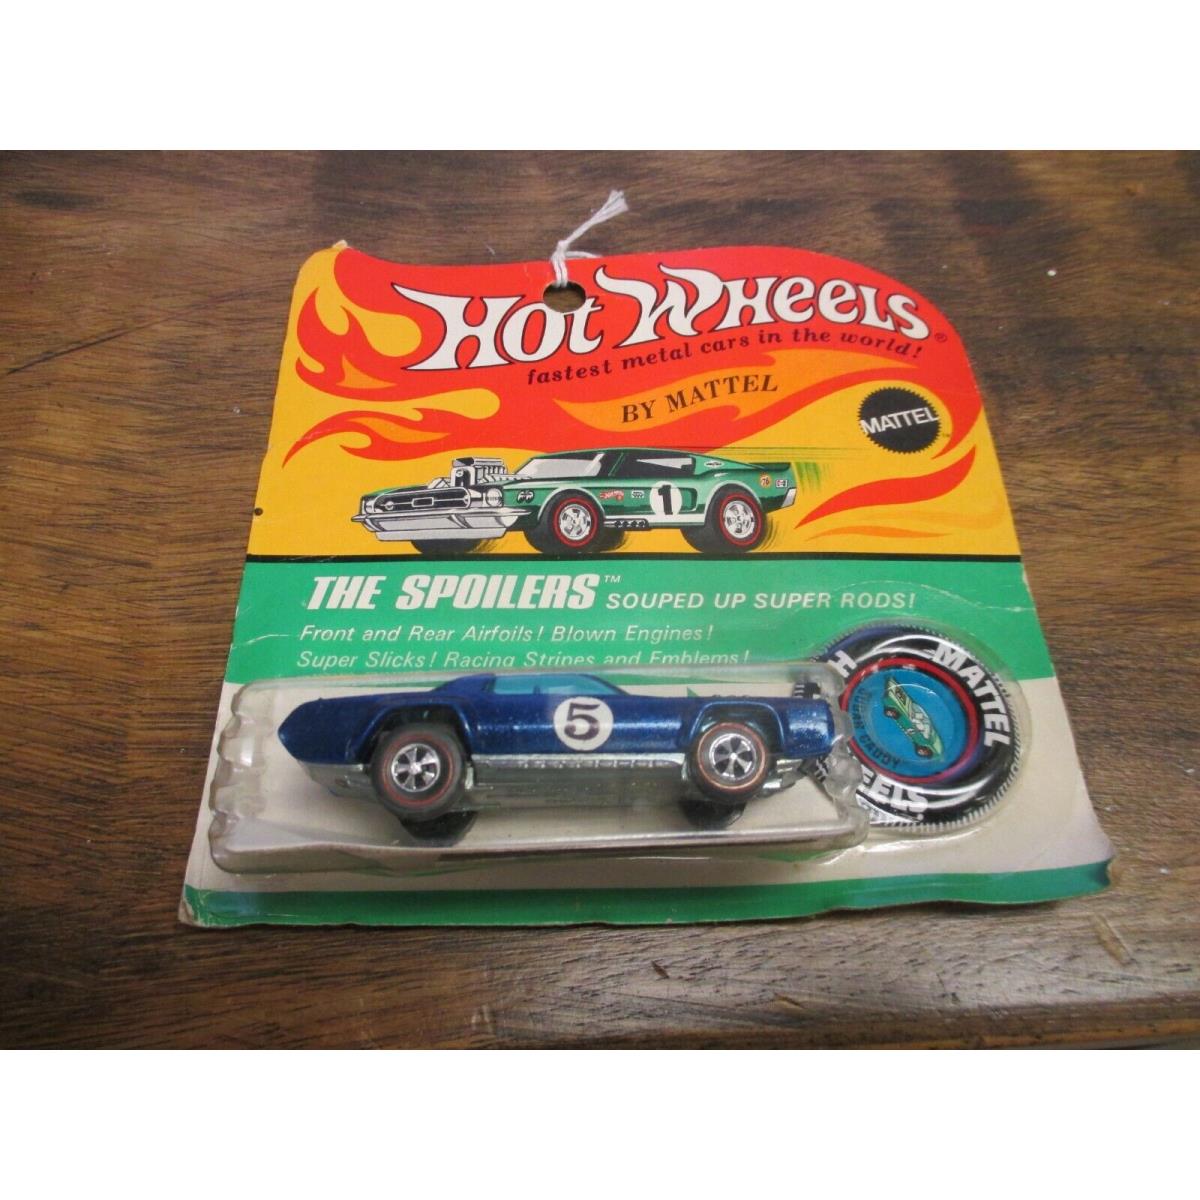 Mattel 1969 Hot Wheels Redline Caddy On Card